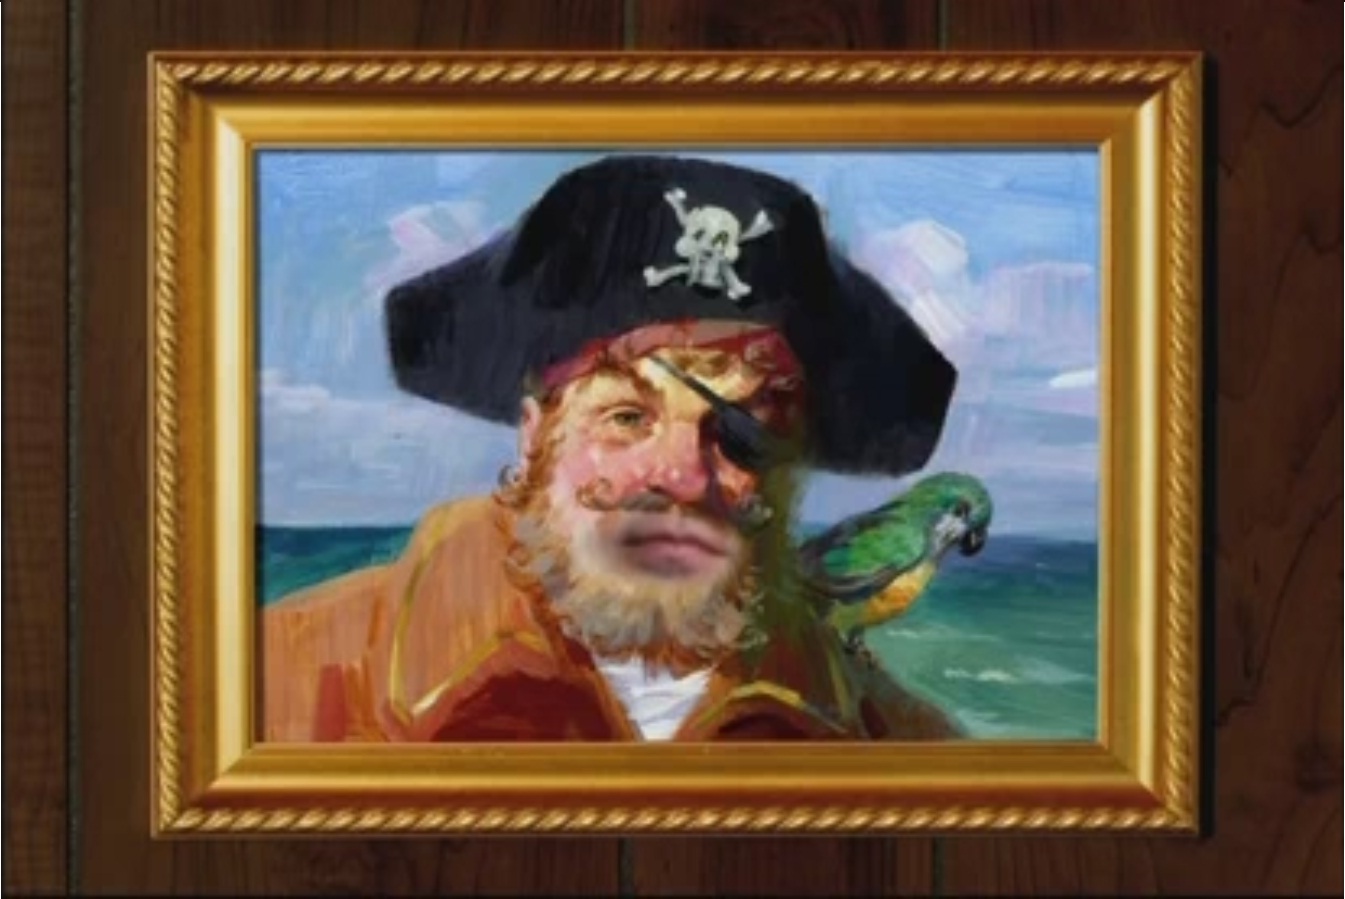 spongebob season 9 torrent the pirate bay